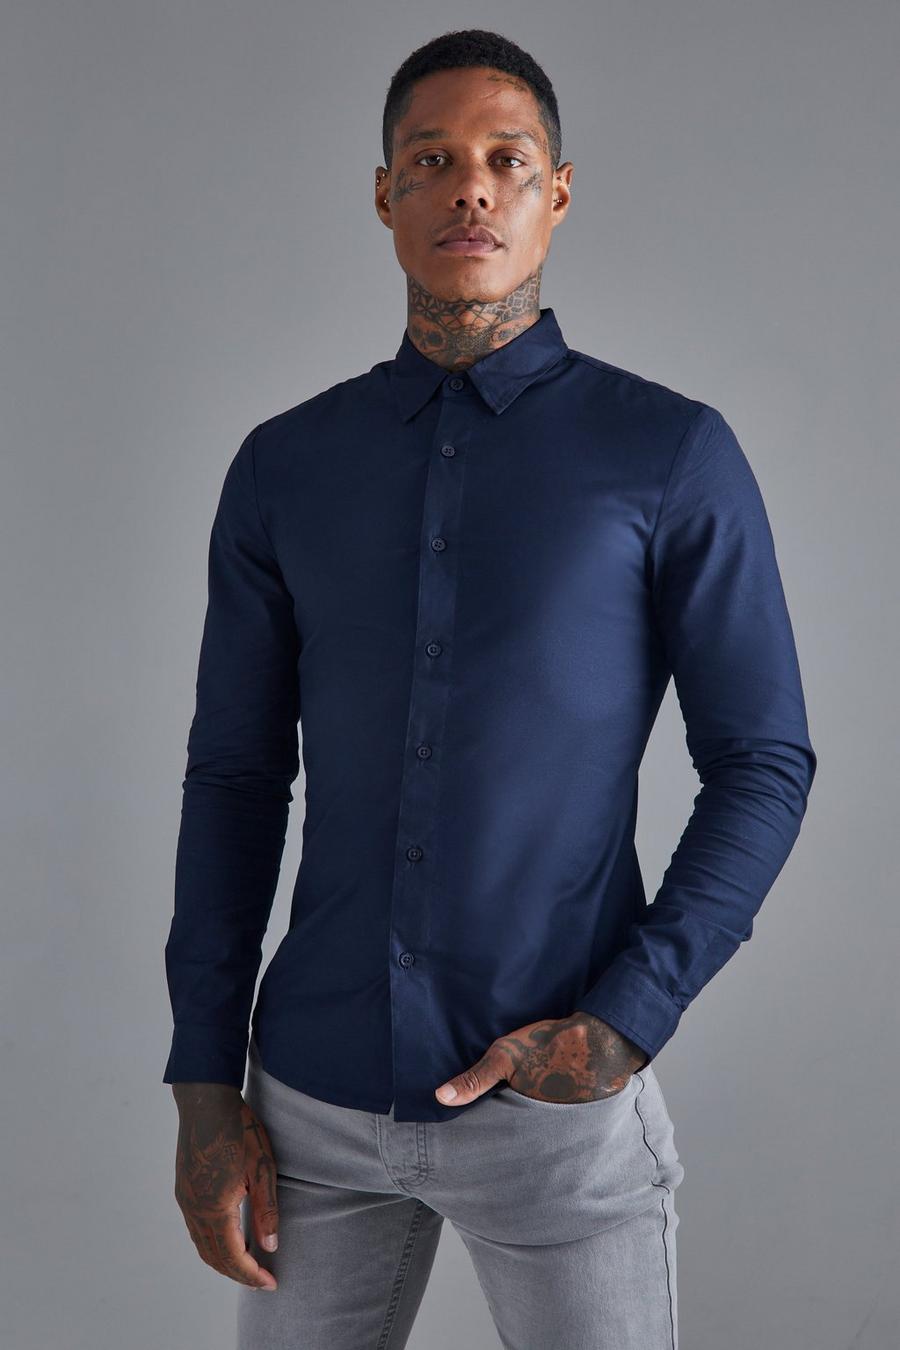 Camisa de manga larga ajustada al músculo, Navy azul marino